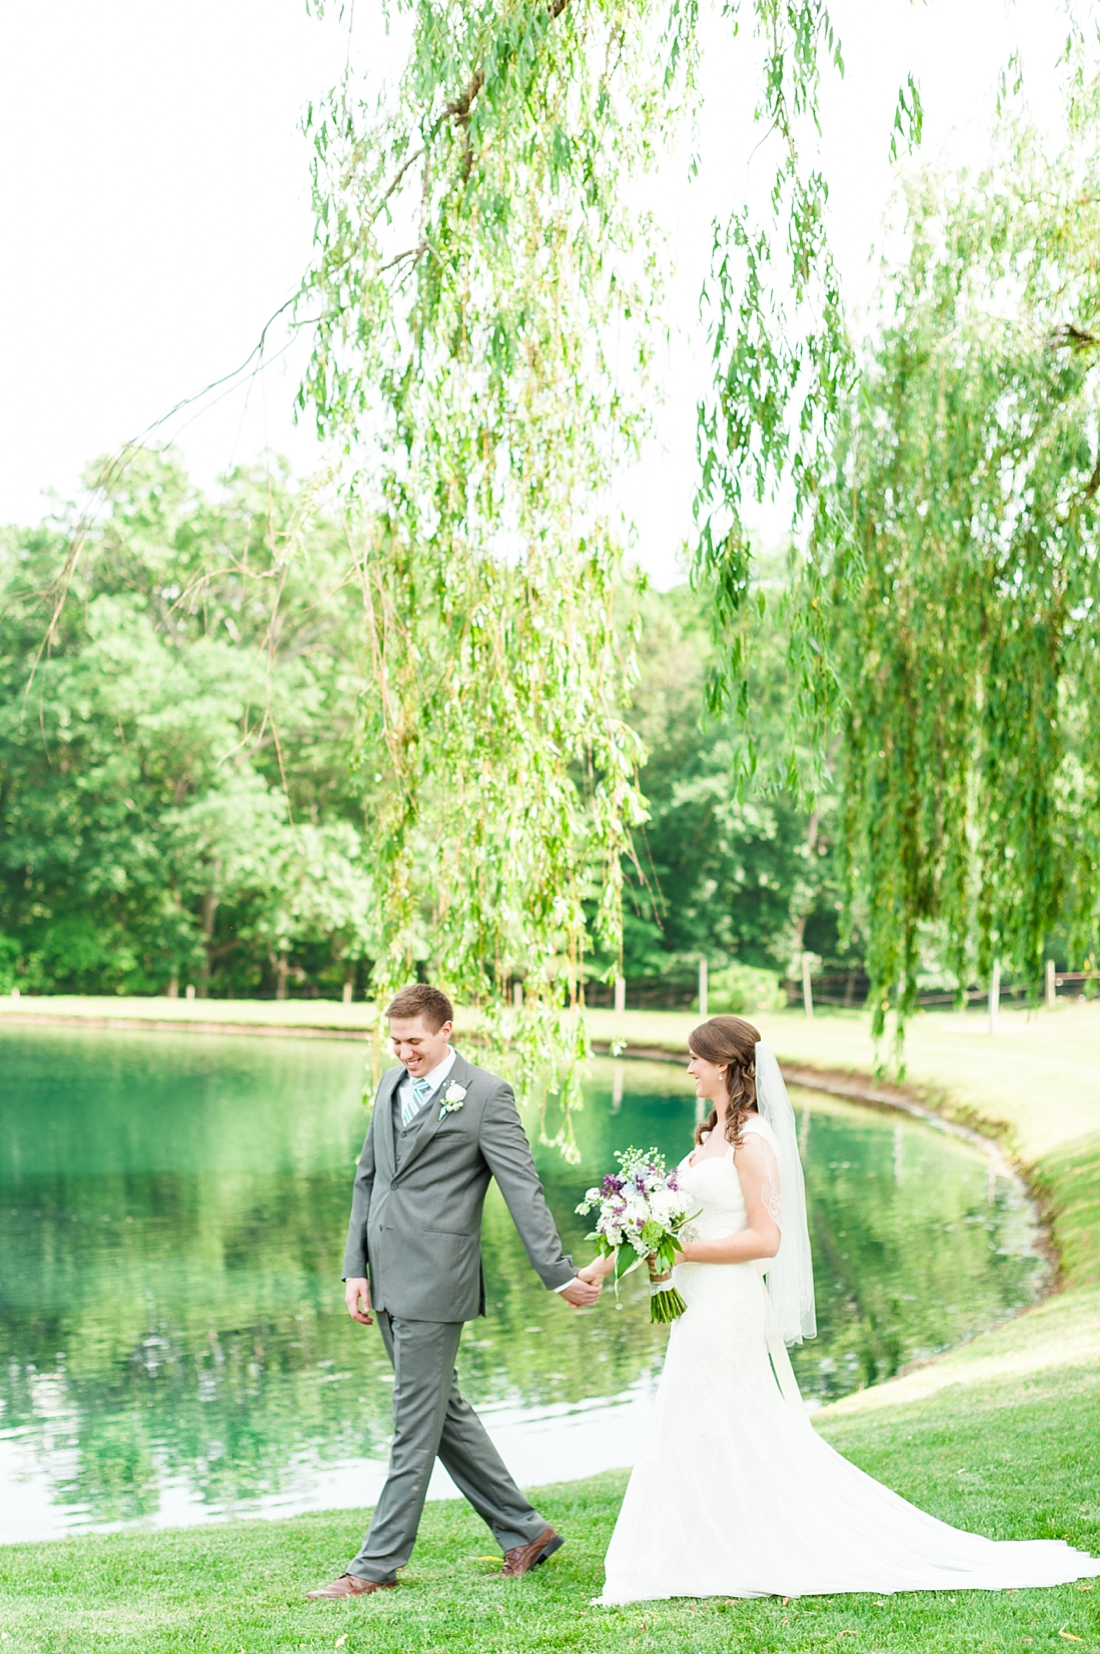 A Pond View Farm Southern Wedding by East Coast + Destination Fine Art Photographer Lauren R Swann